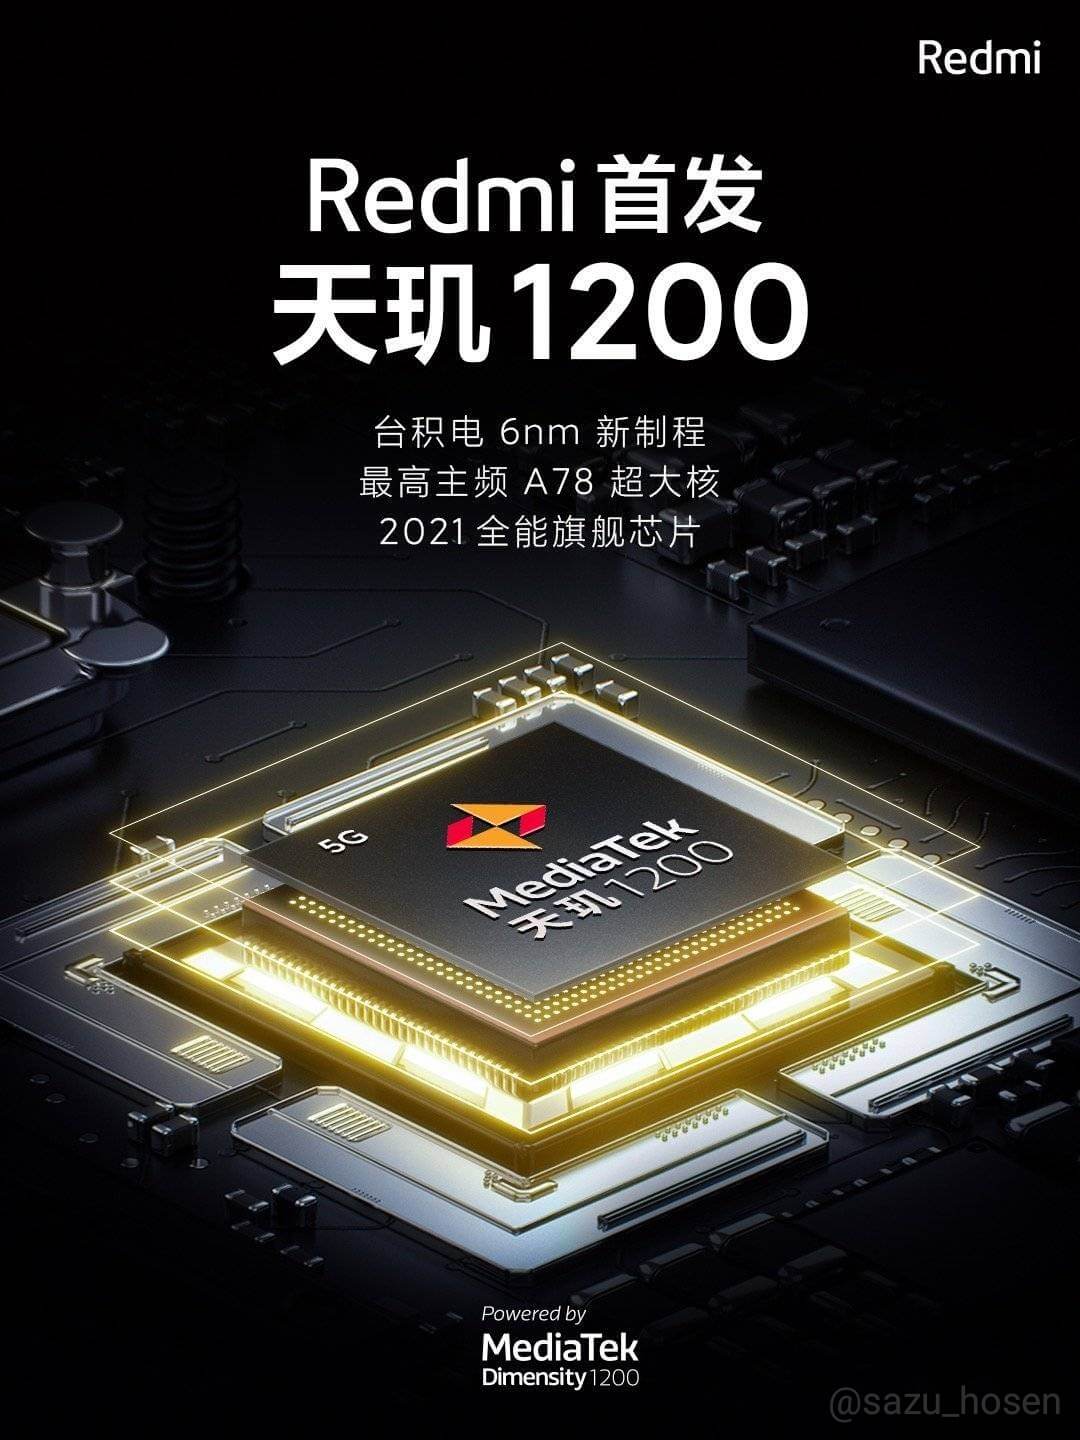 Realme X9 pro with Dimensity 1200